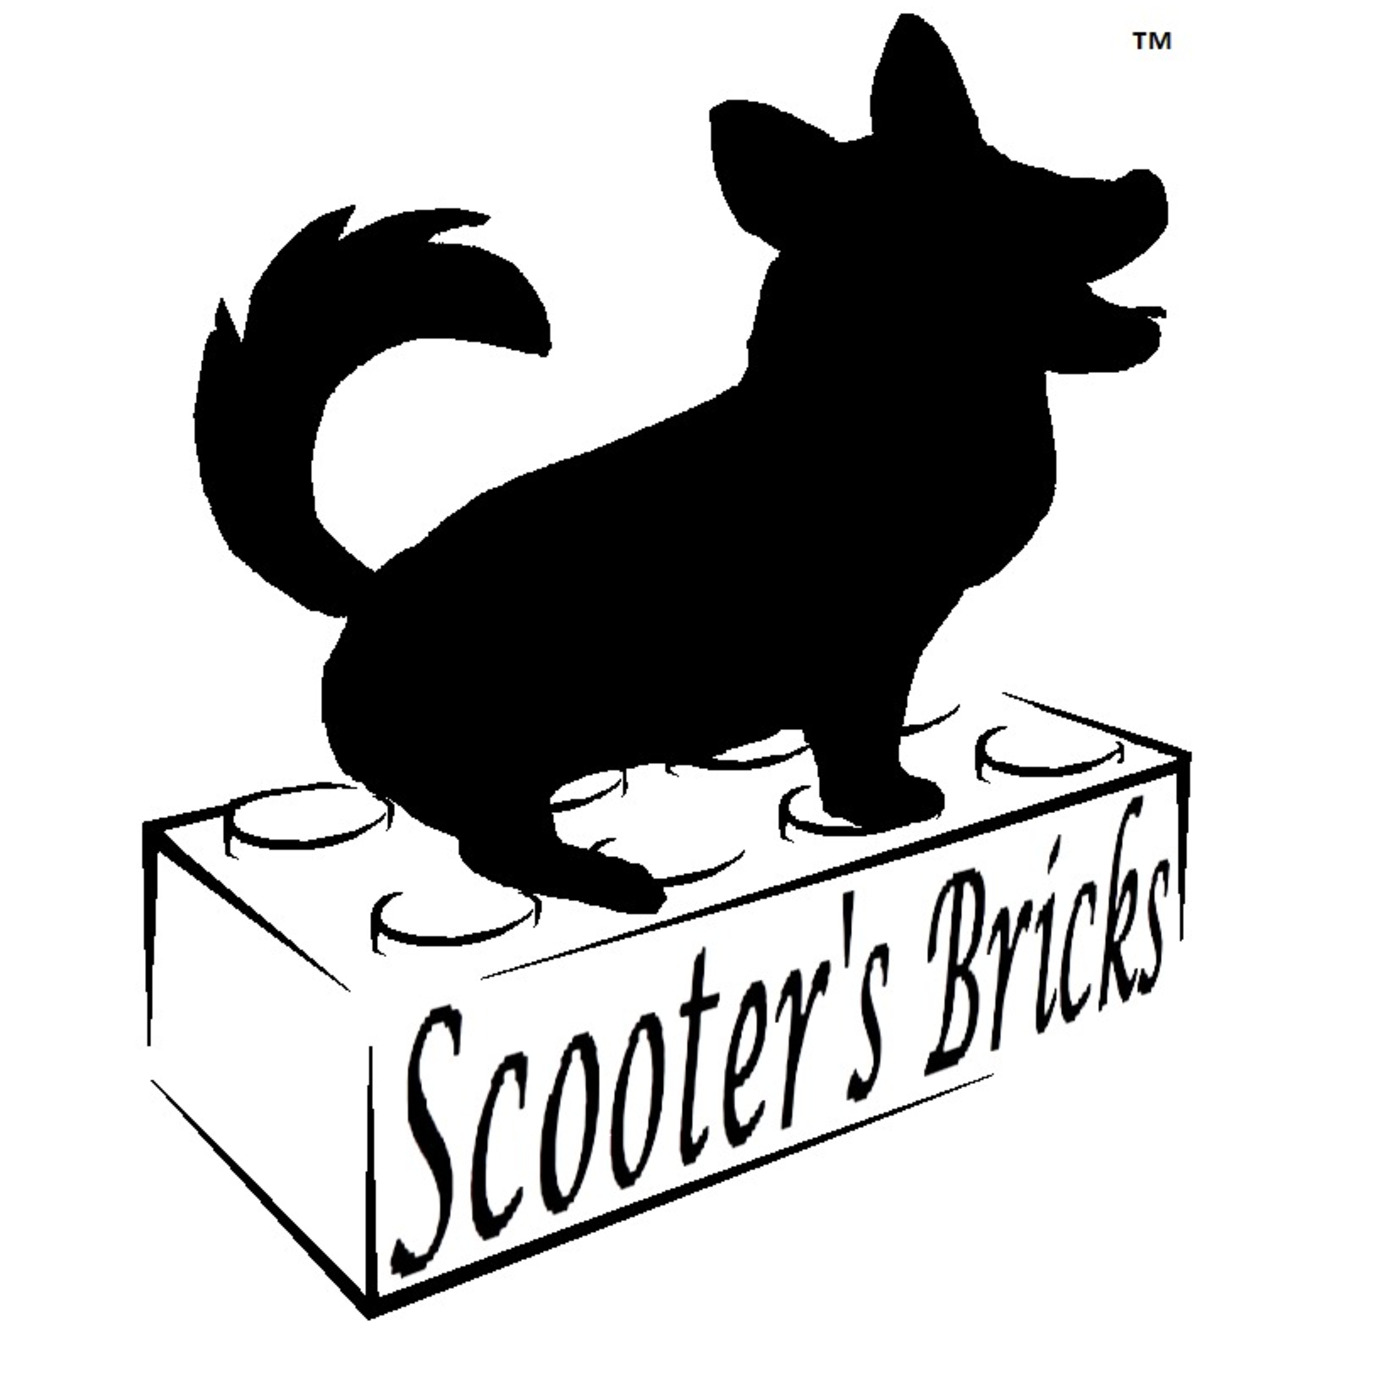 Scooter's Bricks